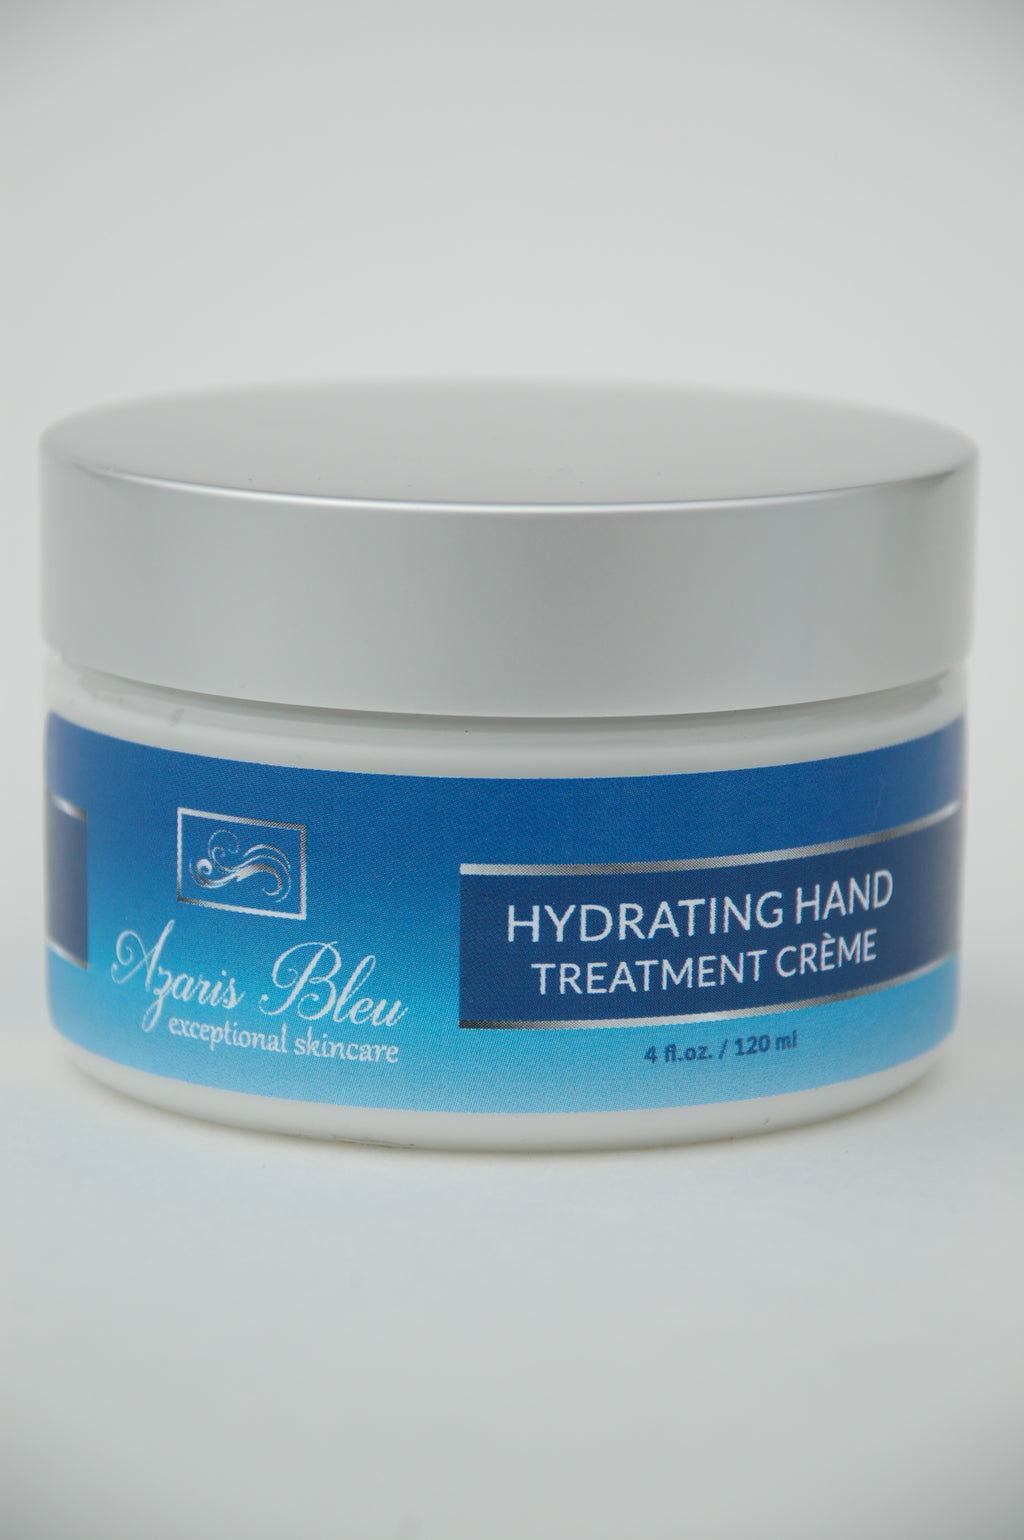 Hydrating Hand Treatment Creme (4oz.)